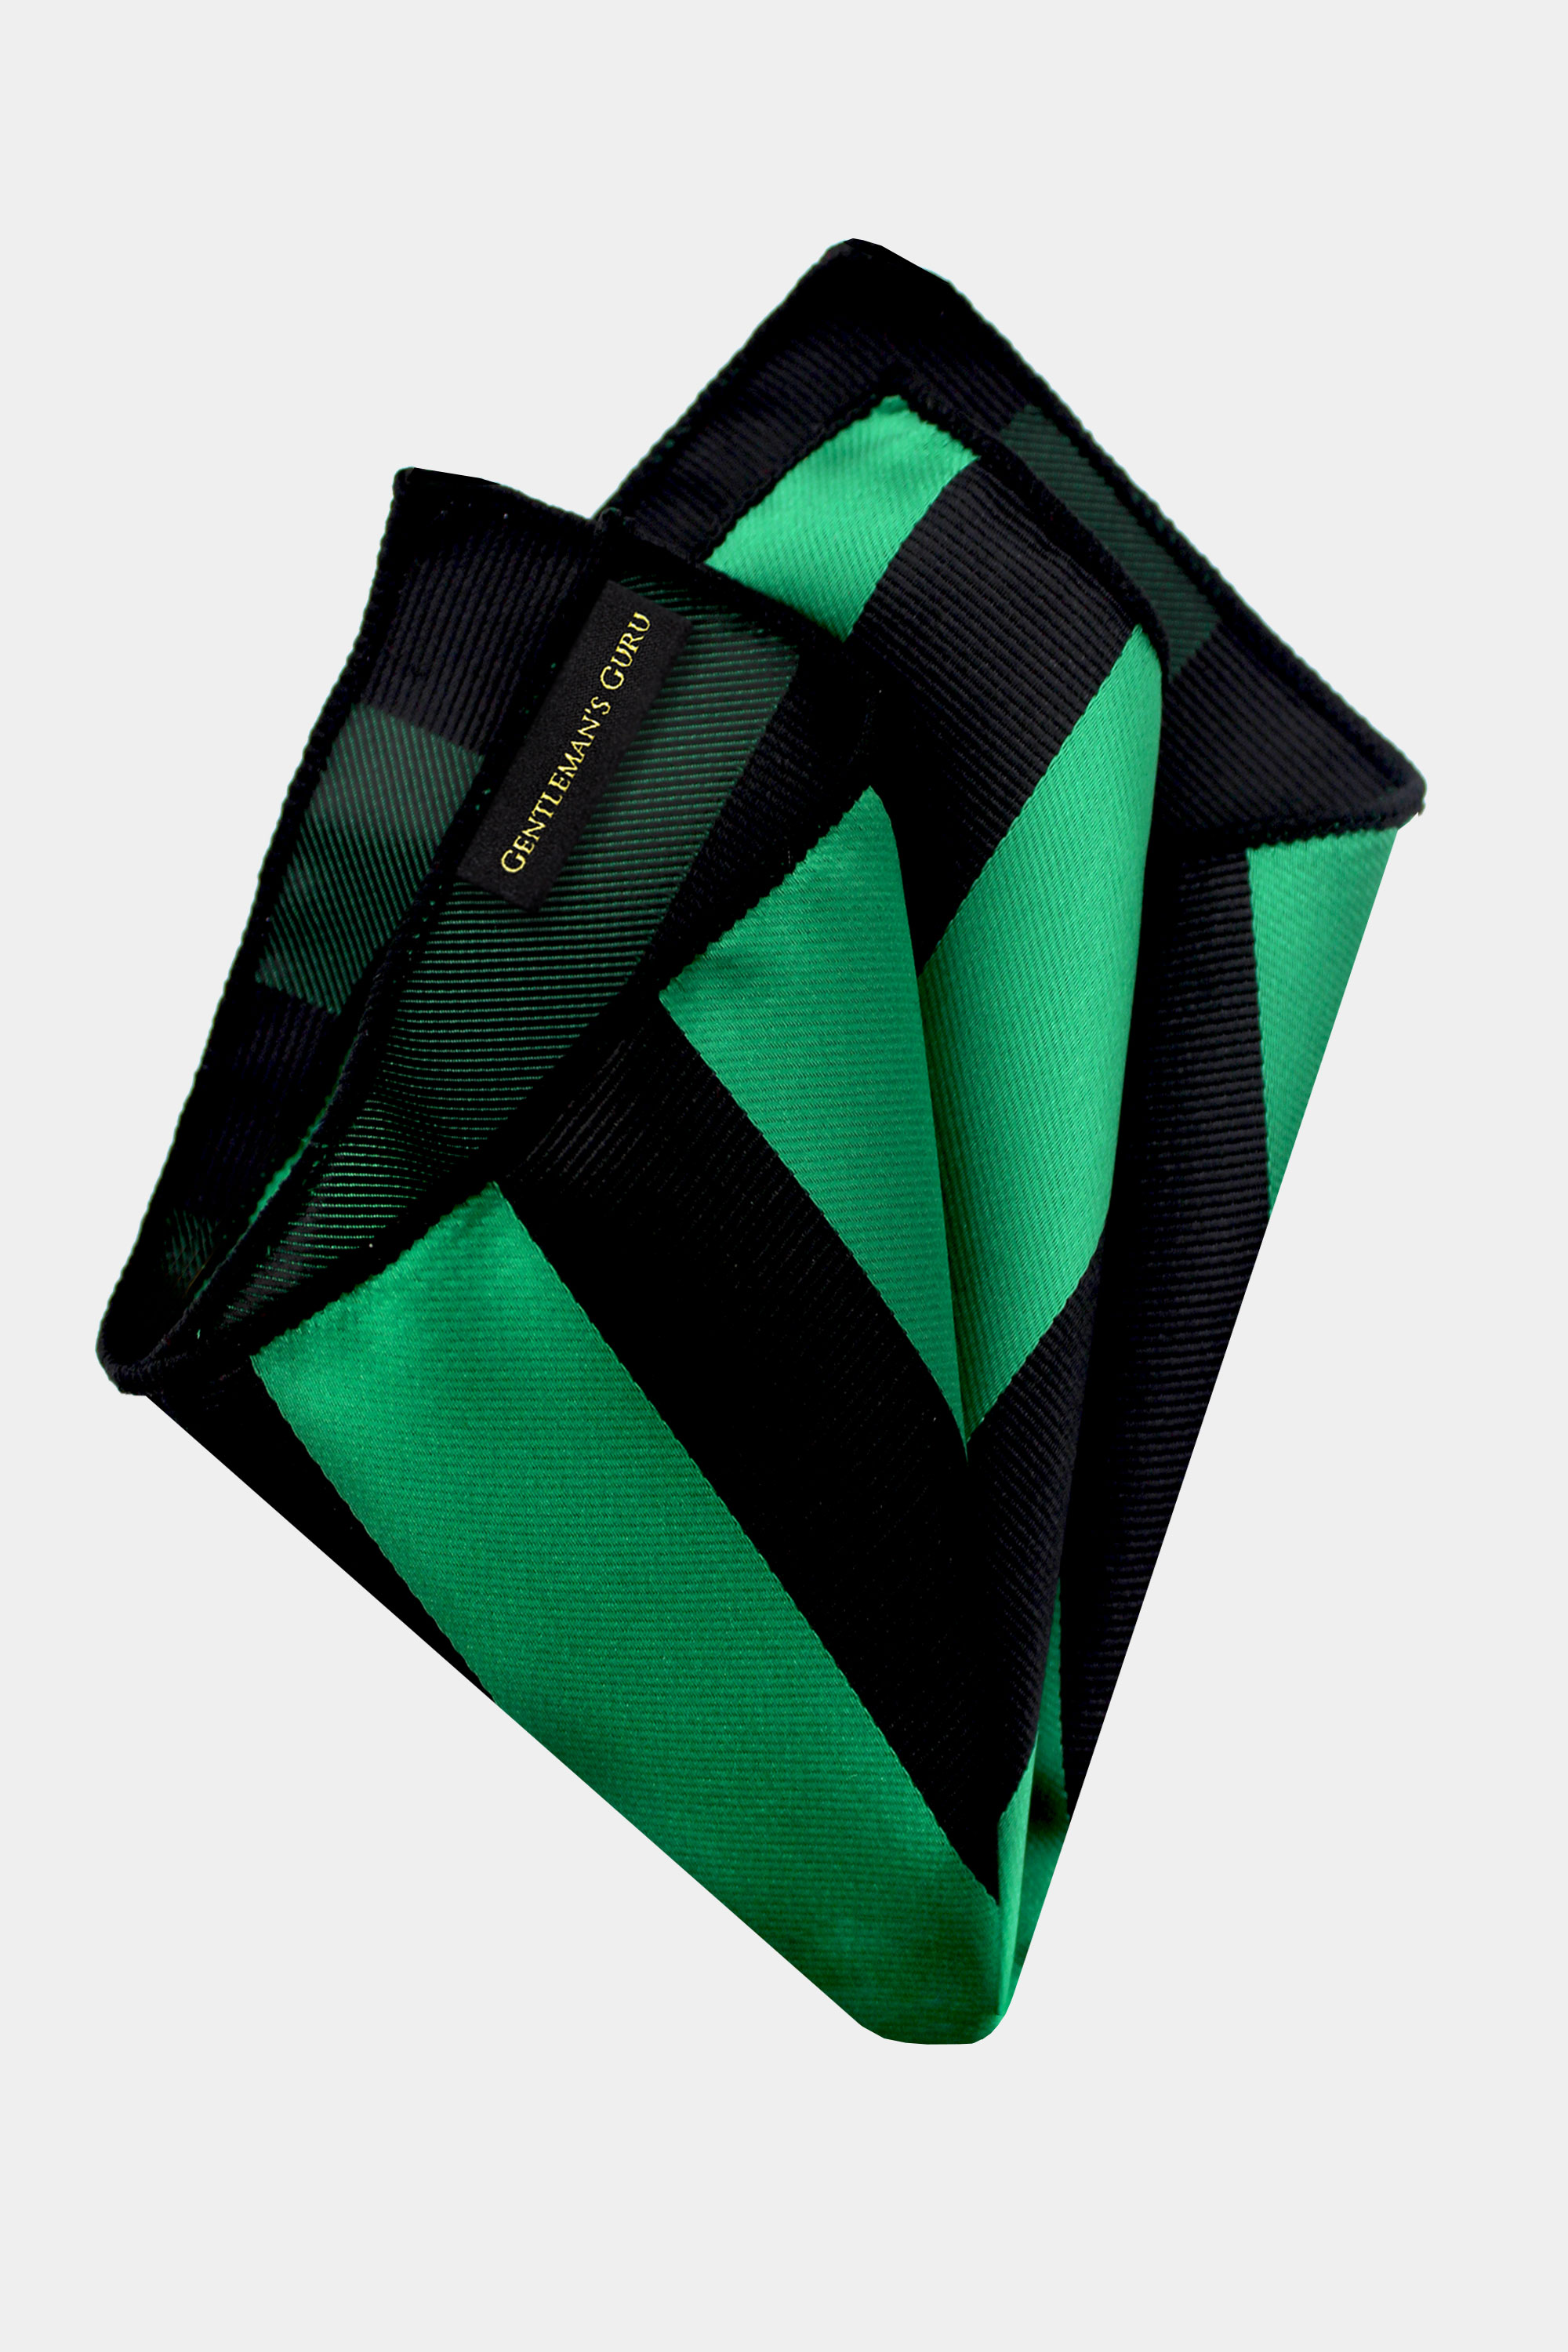 Black-and-Green-Striped-Pocket-Square-Handkerchief-from-Gentlemansguru.com